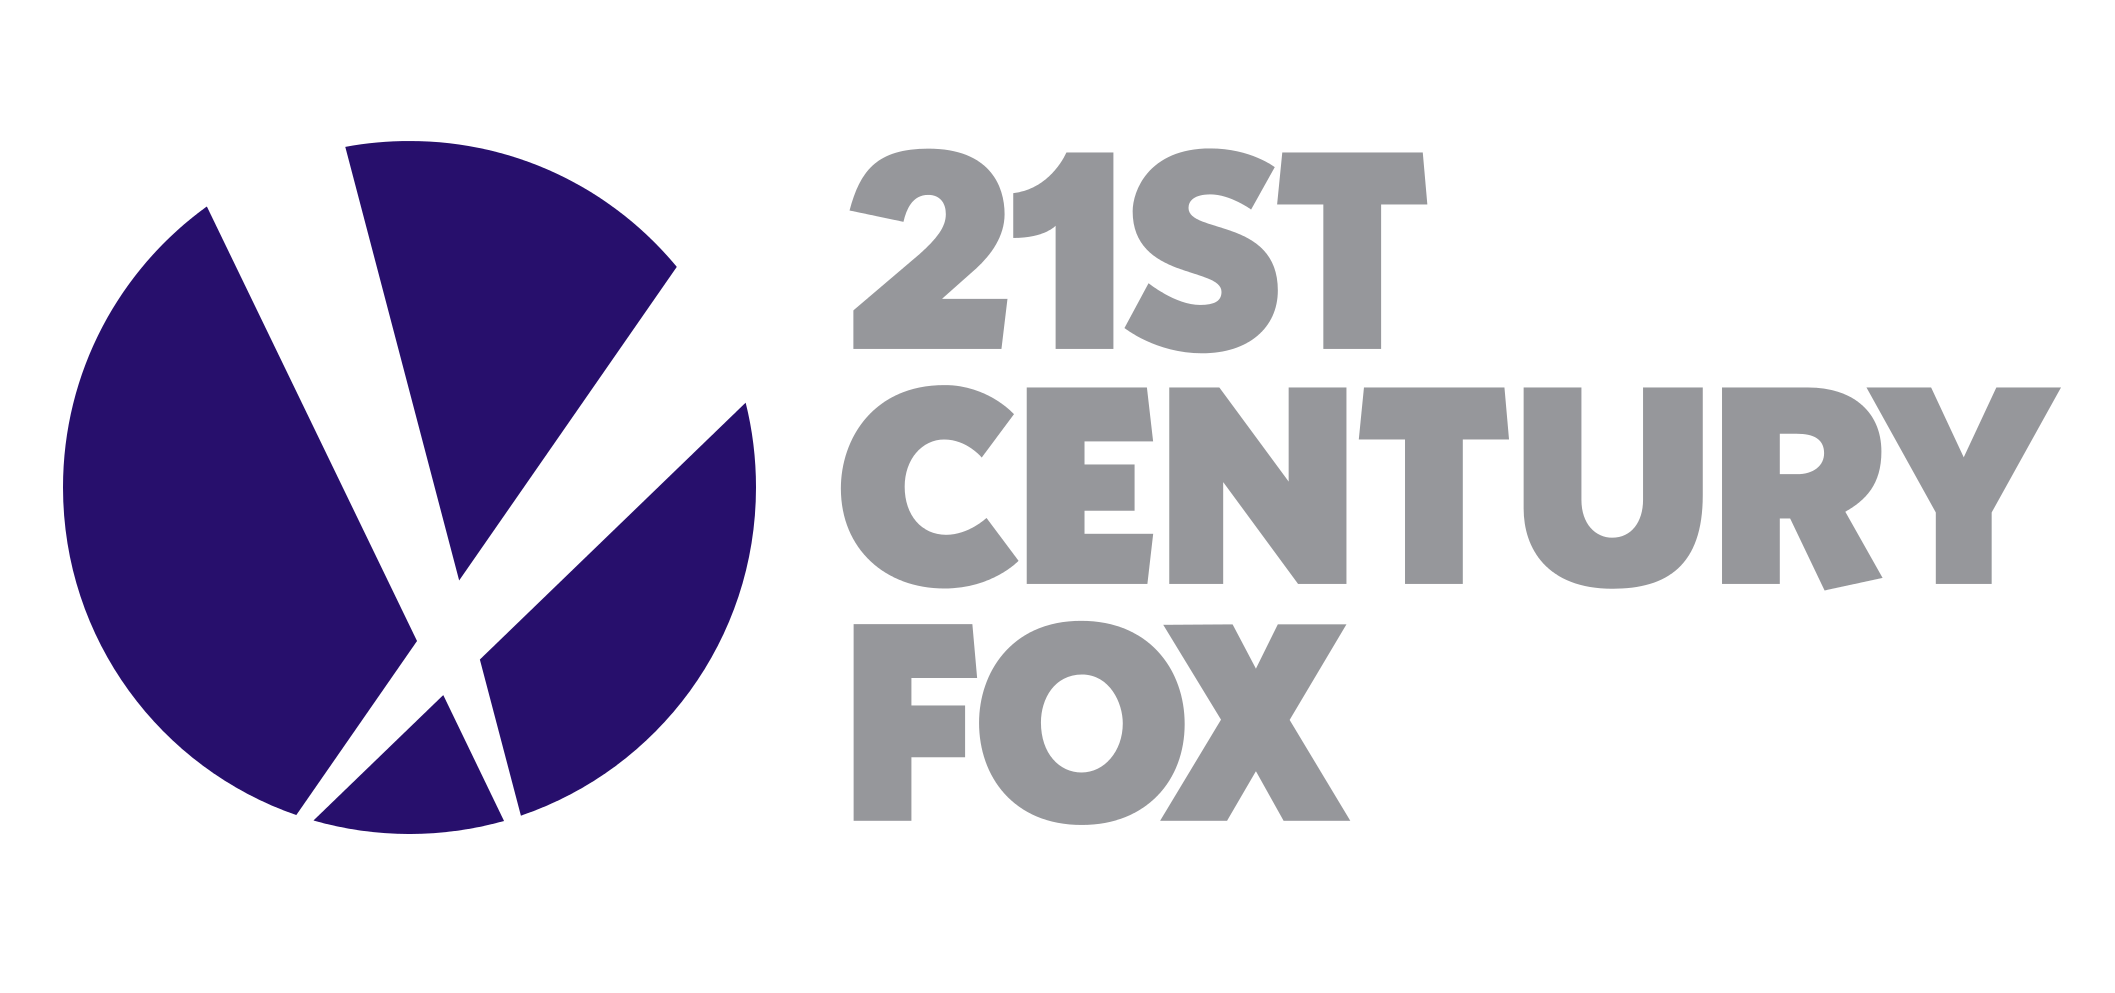 Logo 21St Century Fox Png Hdpng.com 2115 - 21st Century Fox, Transparent background PNG HD thumbnail